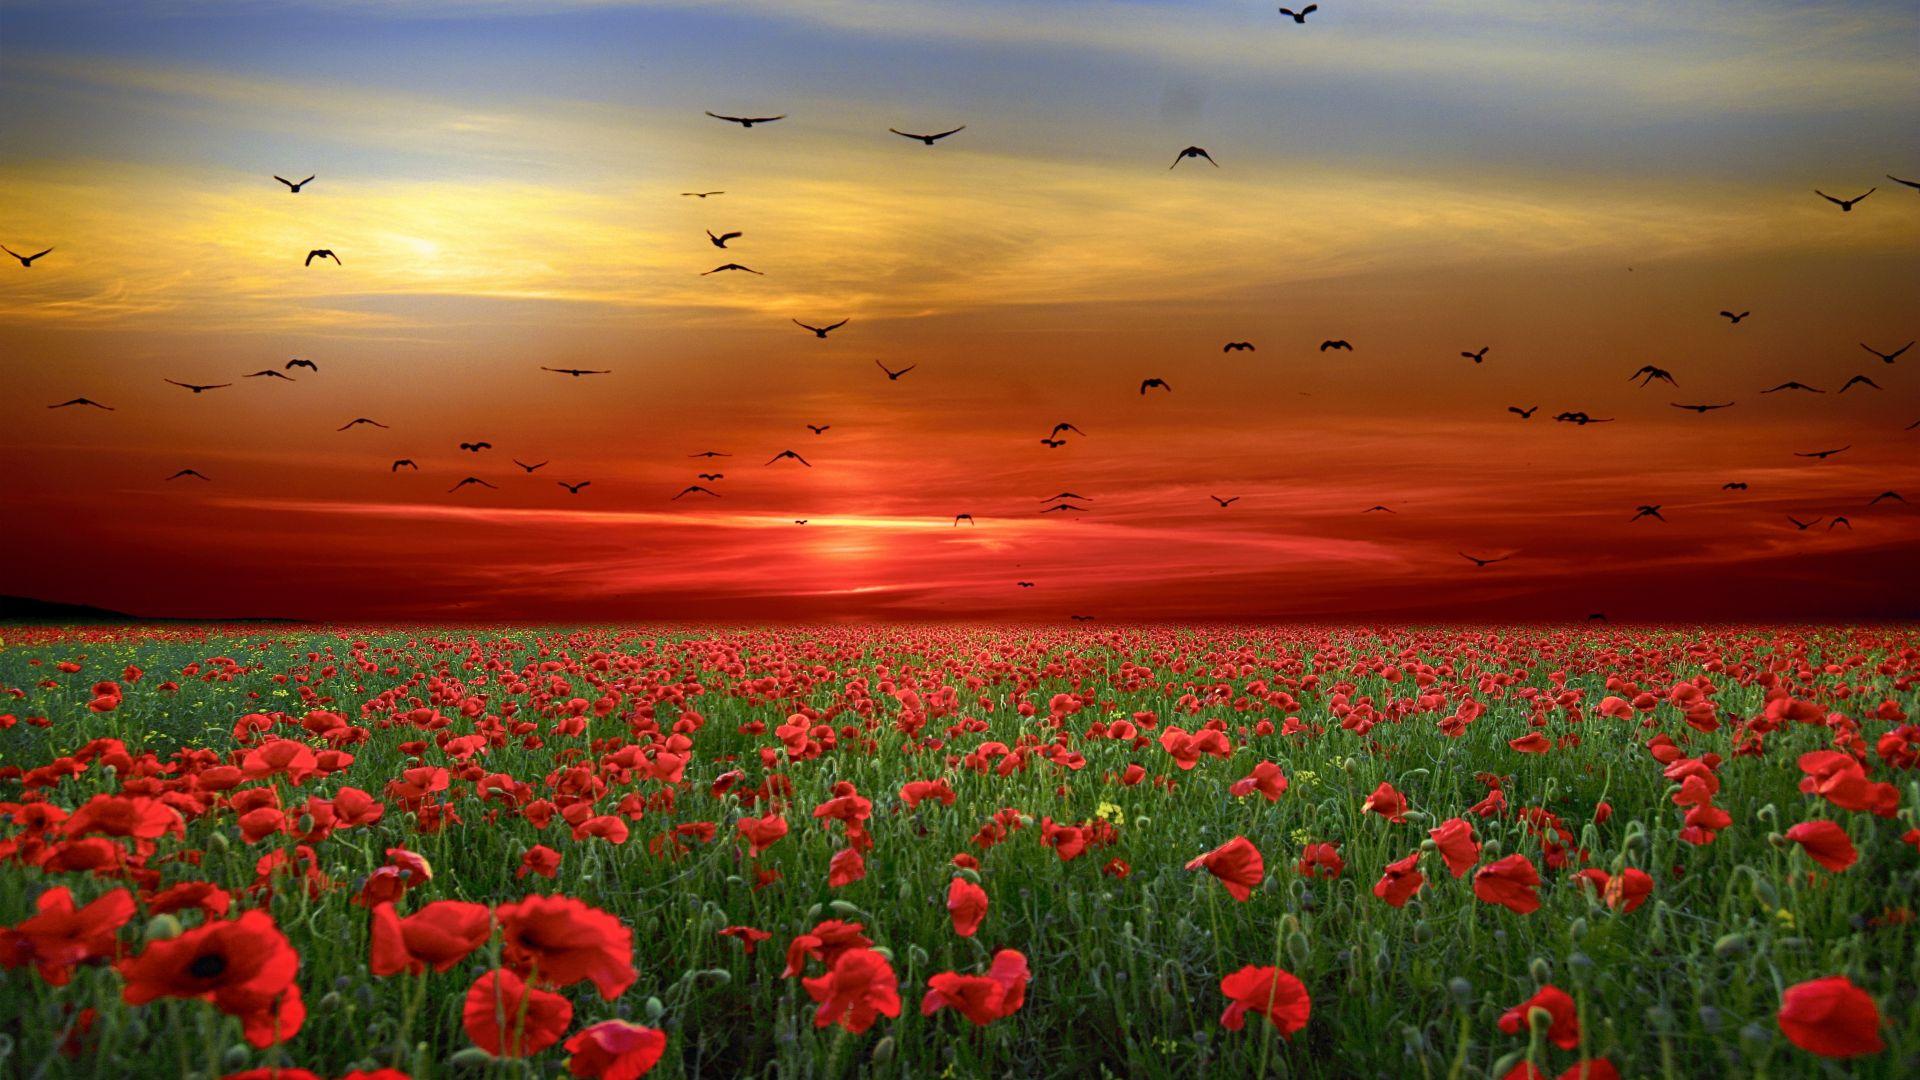 Landscape, poppy farm, sunset wallpaper, HD image, picture, background, 9dd5e8